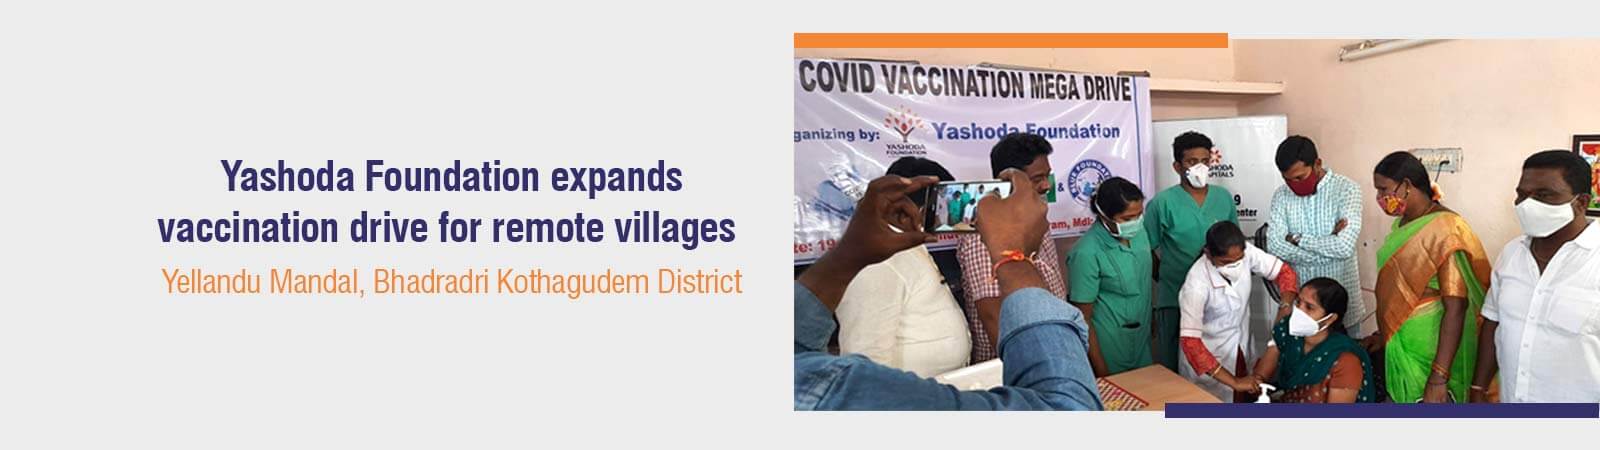 Yashoda Foundation expands vaccination drive